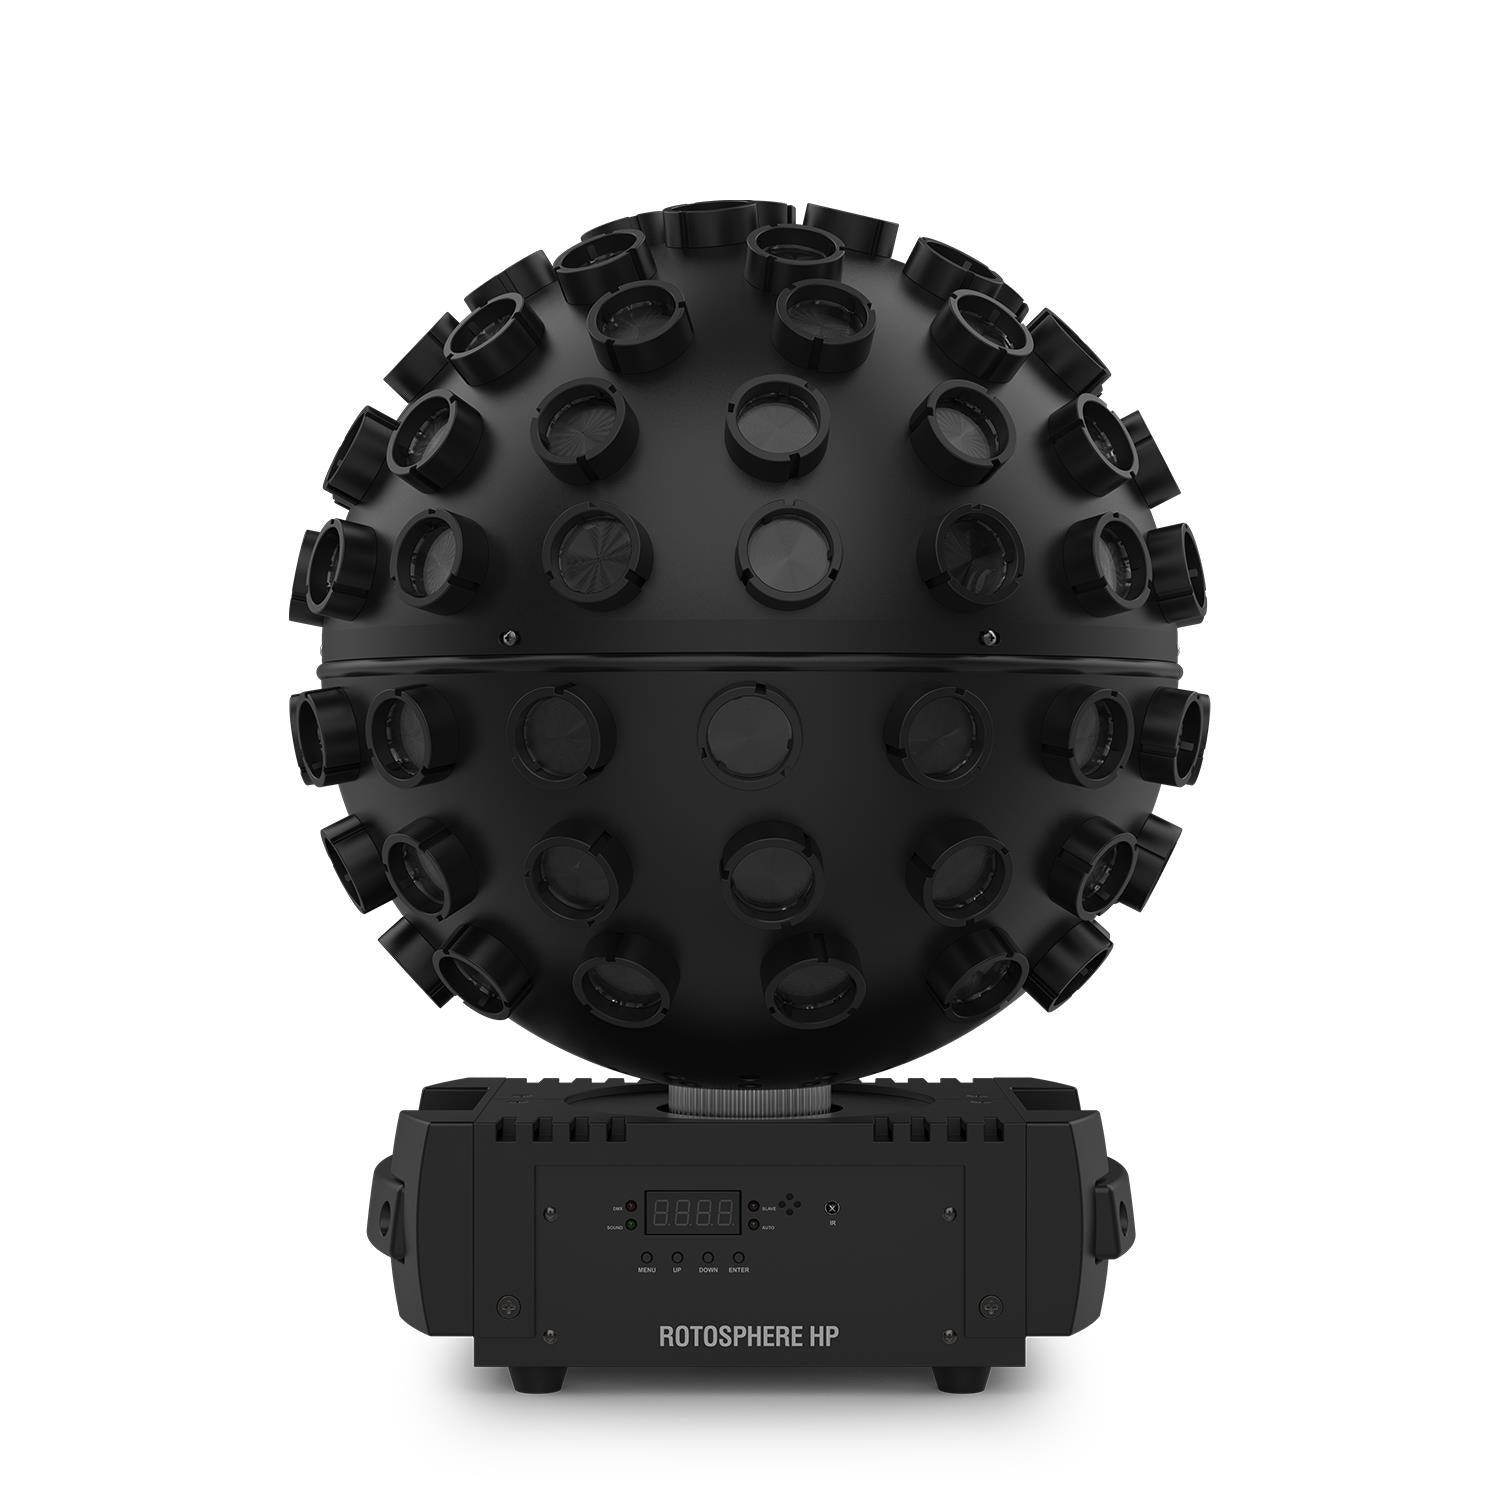 2 x Chauvet DJ Rotosphere HP Quad Colour Sphere Mirror Ball with DMX Cable - DY Pro Audio